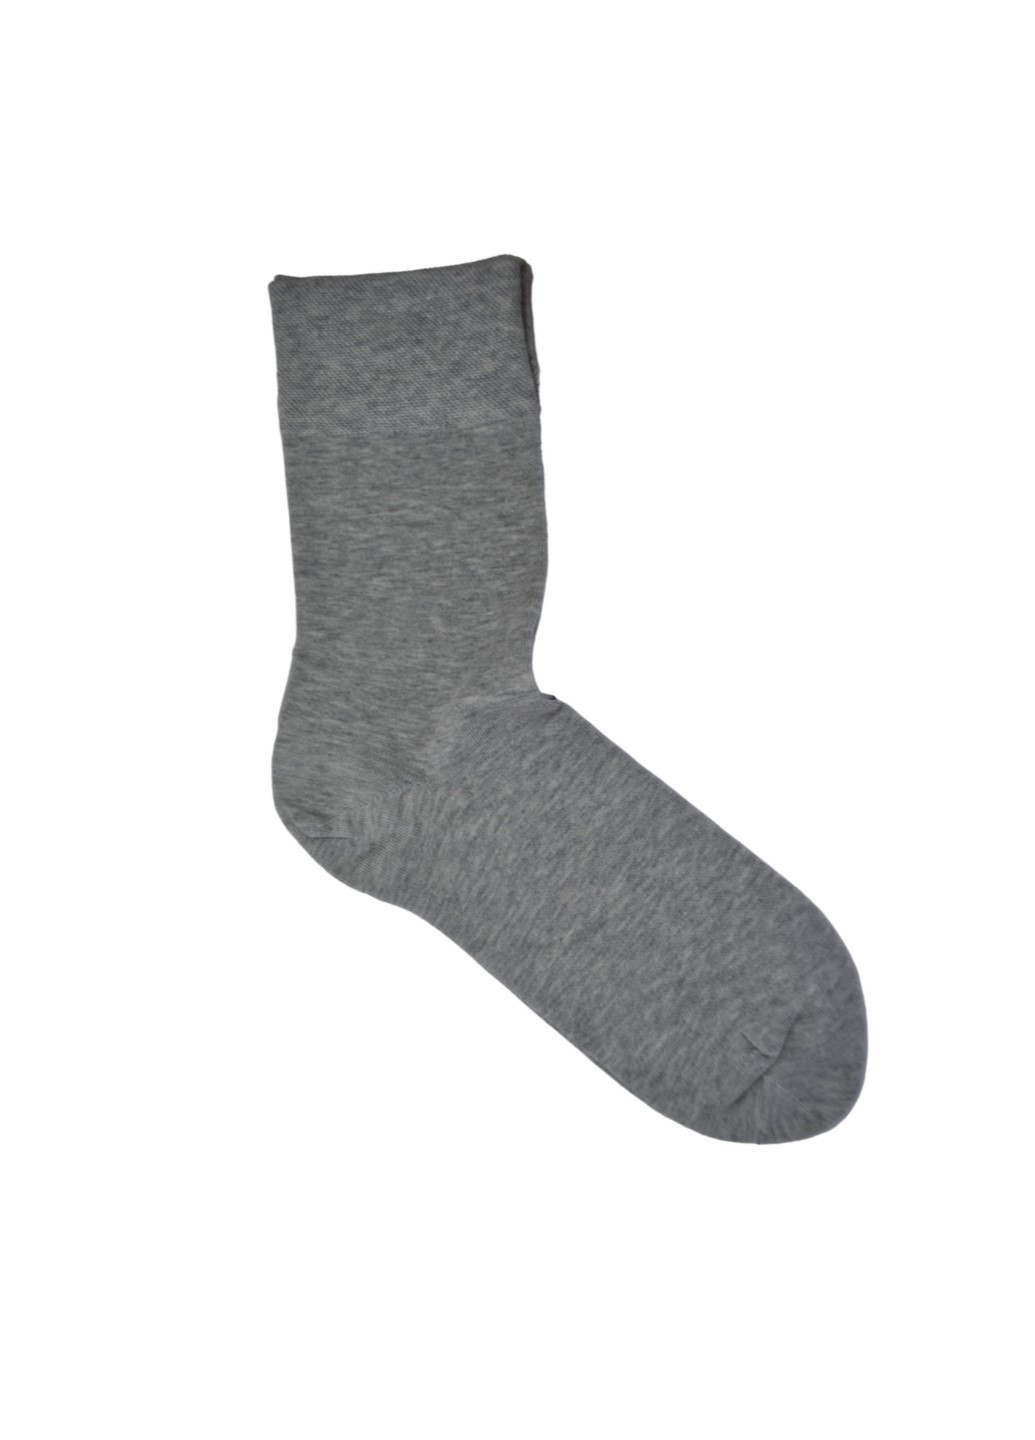 NTF Шкарпетки чол. (середньої довжини), р.39-42, light grey melange MZ ms3 classic (259643337)